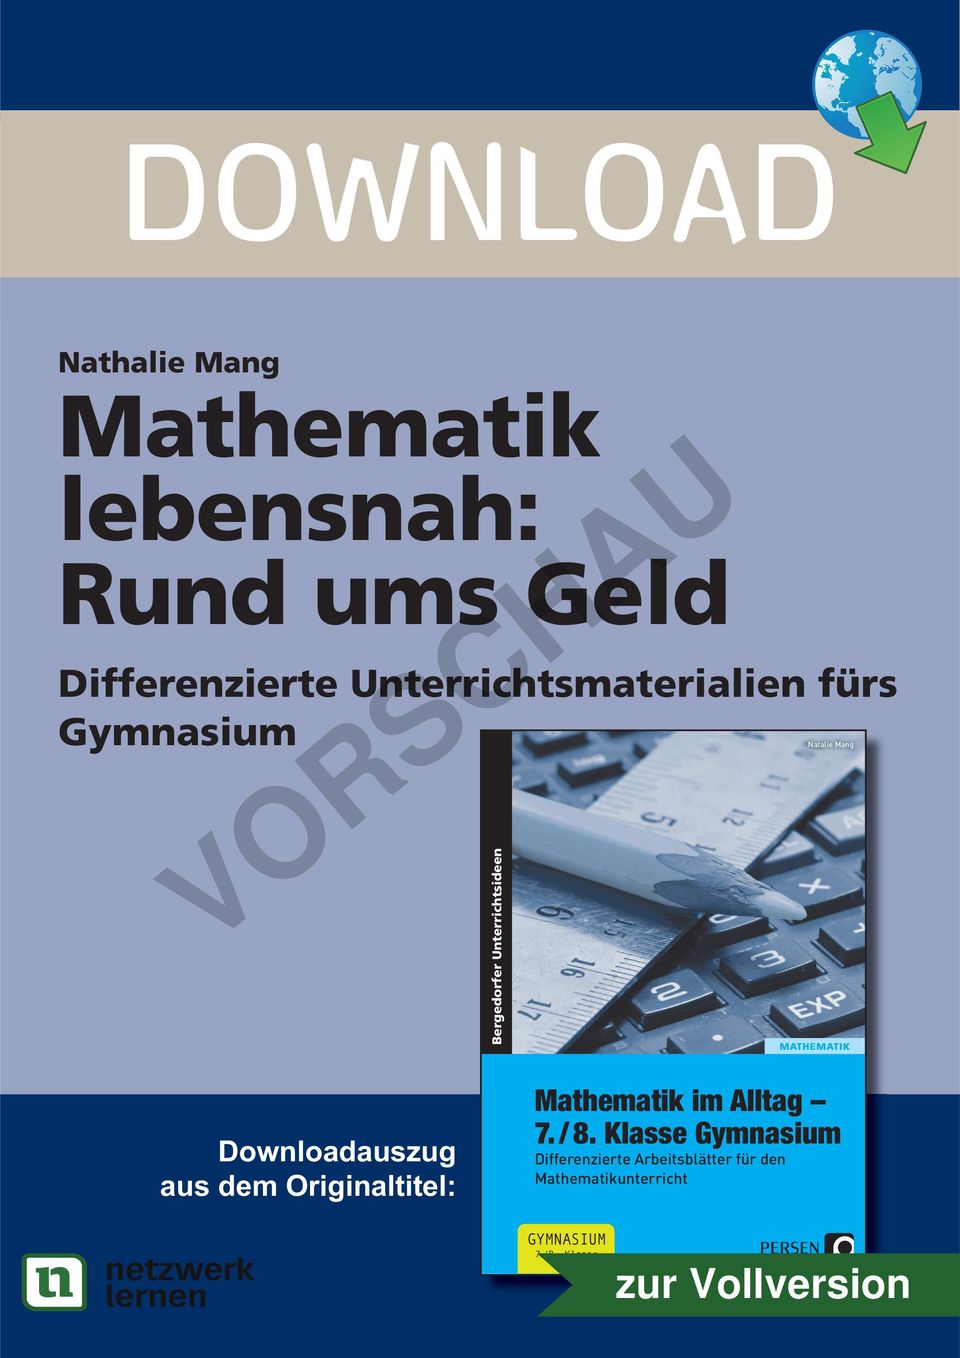 MATHEMATIK Downloadauszug aus dem Originaltitel: Mathematik im Alltag 7. / 8.